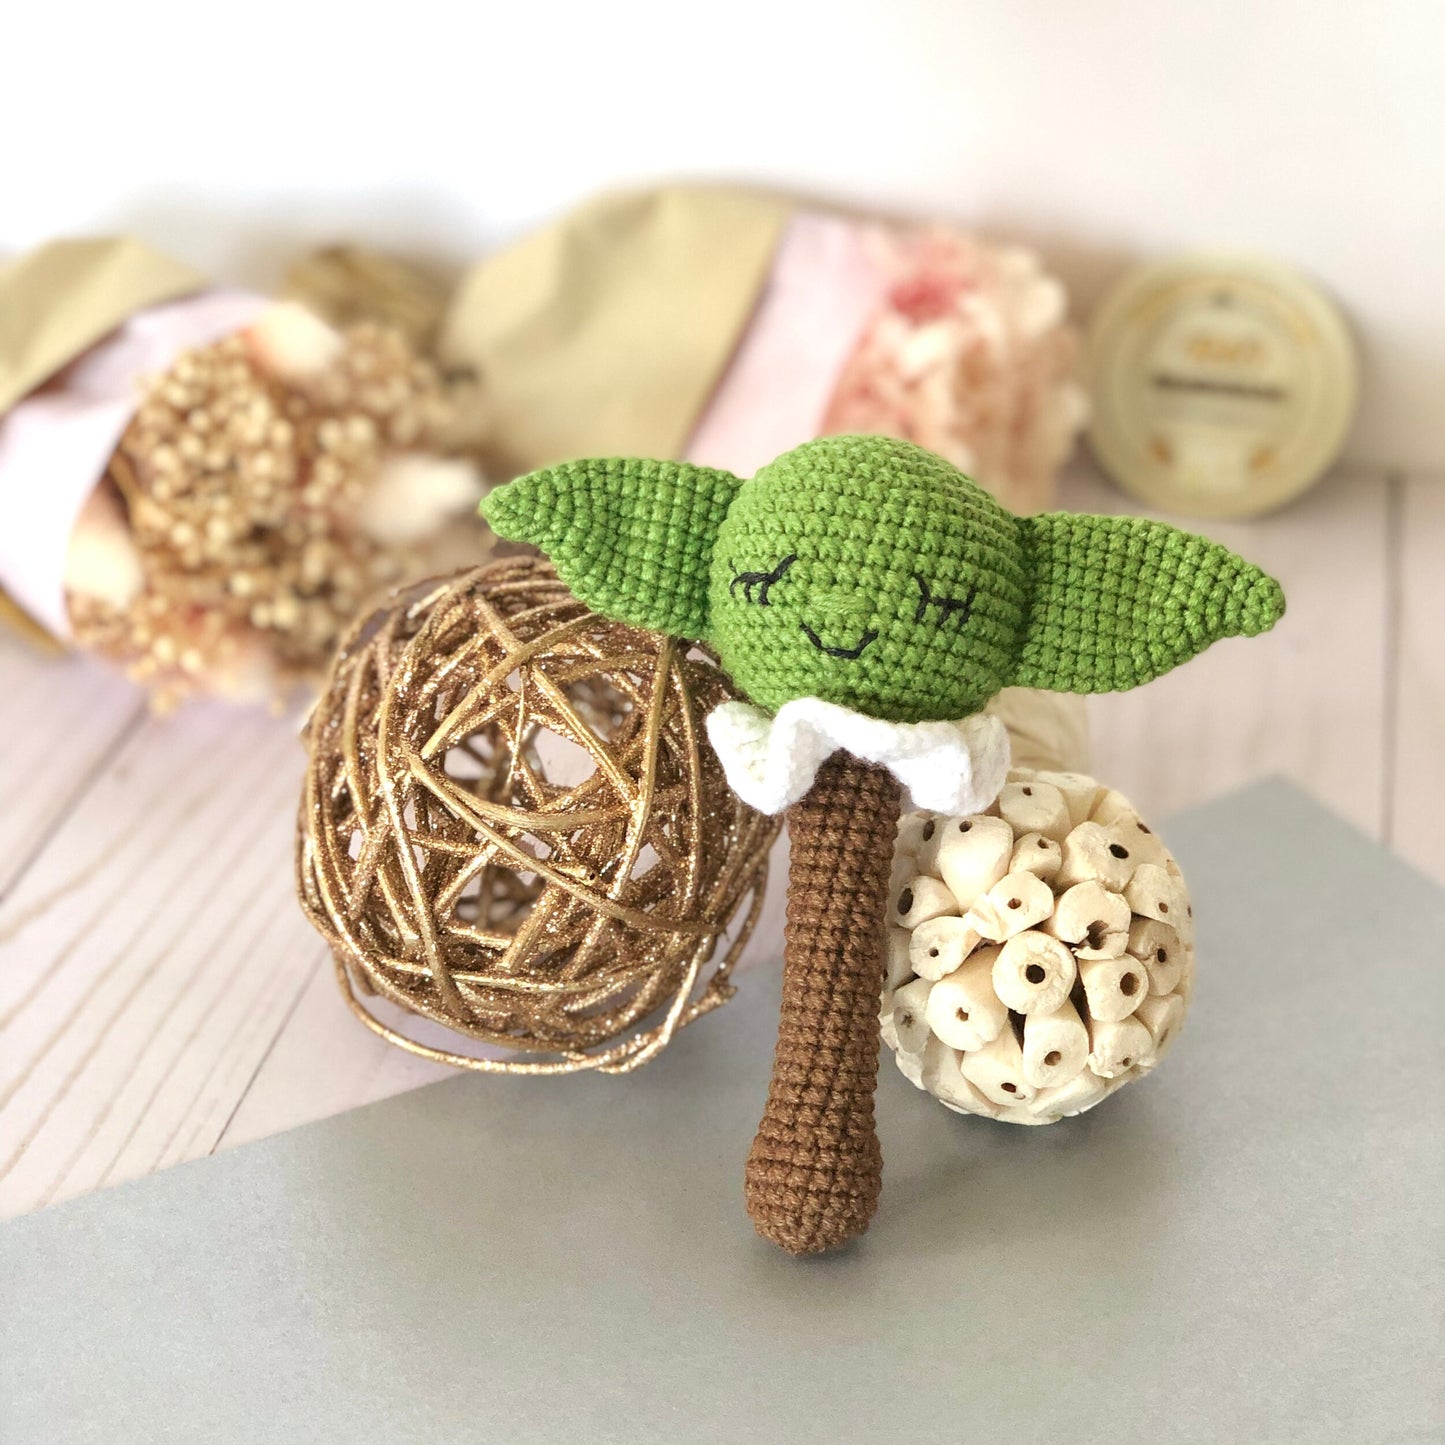 Animal newborn baby rattle, Baby crochet rattle gift, teething ring for baby